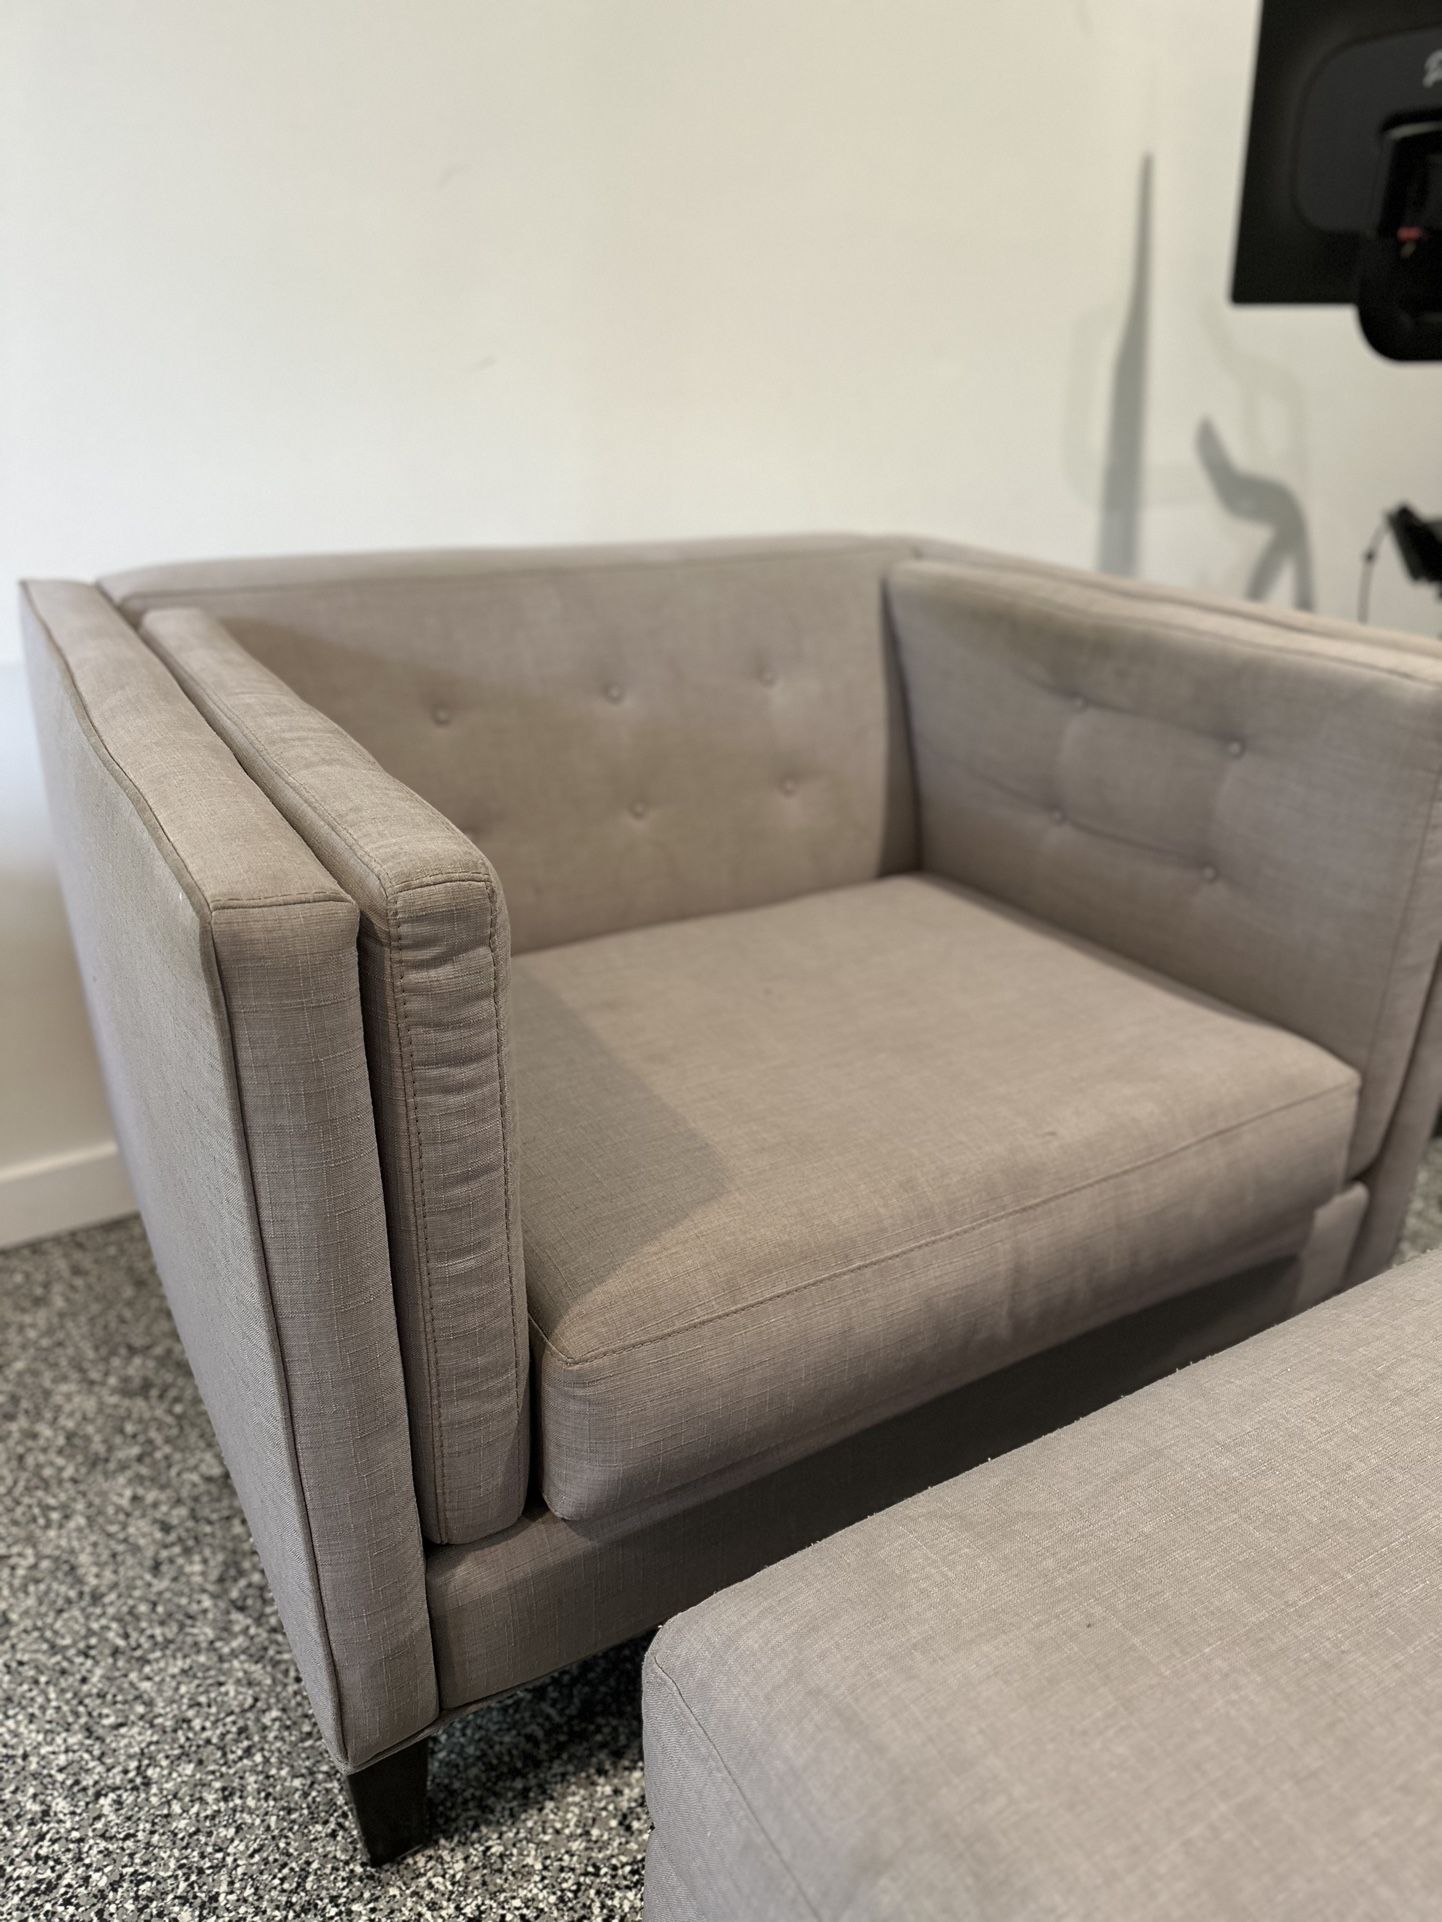 Free: Sofa Chair and Ottoman (Used)